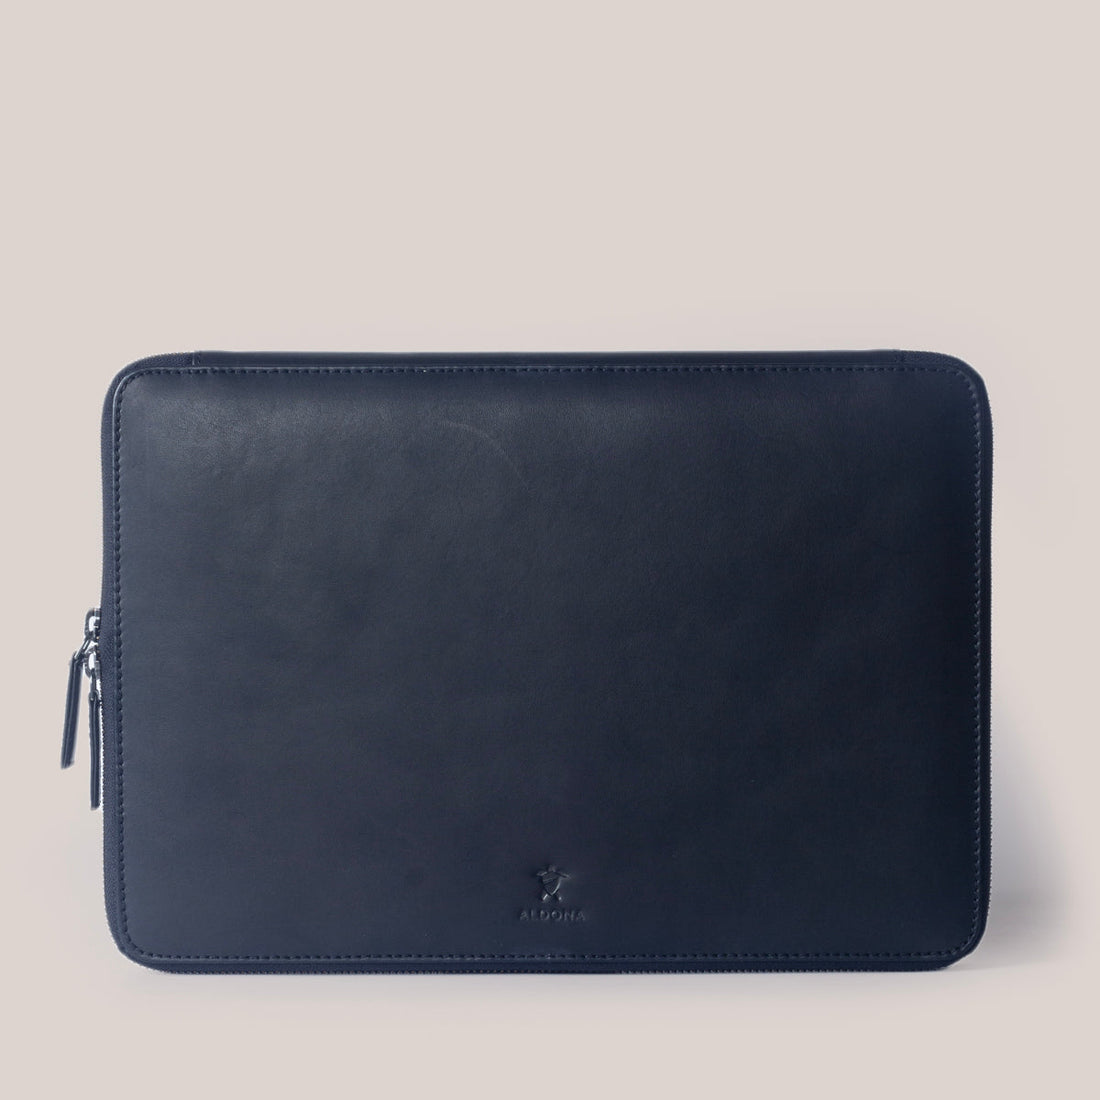 DELL XPS 13 Zippered Laptop Case - Onyx Black